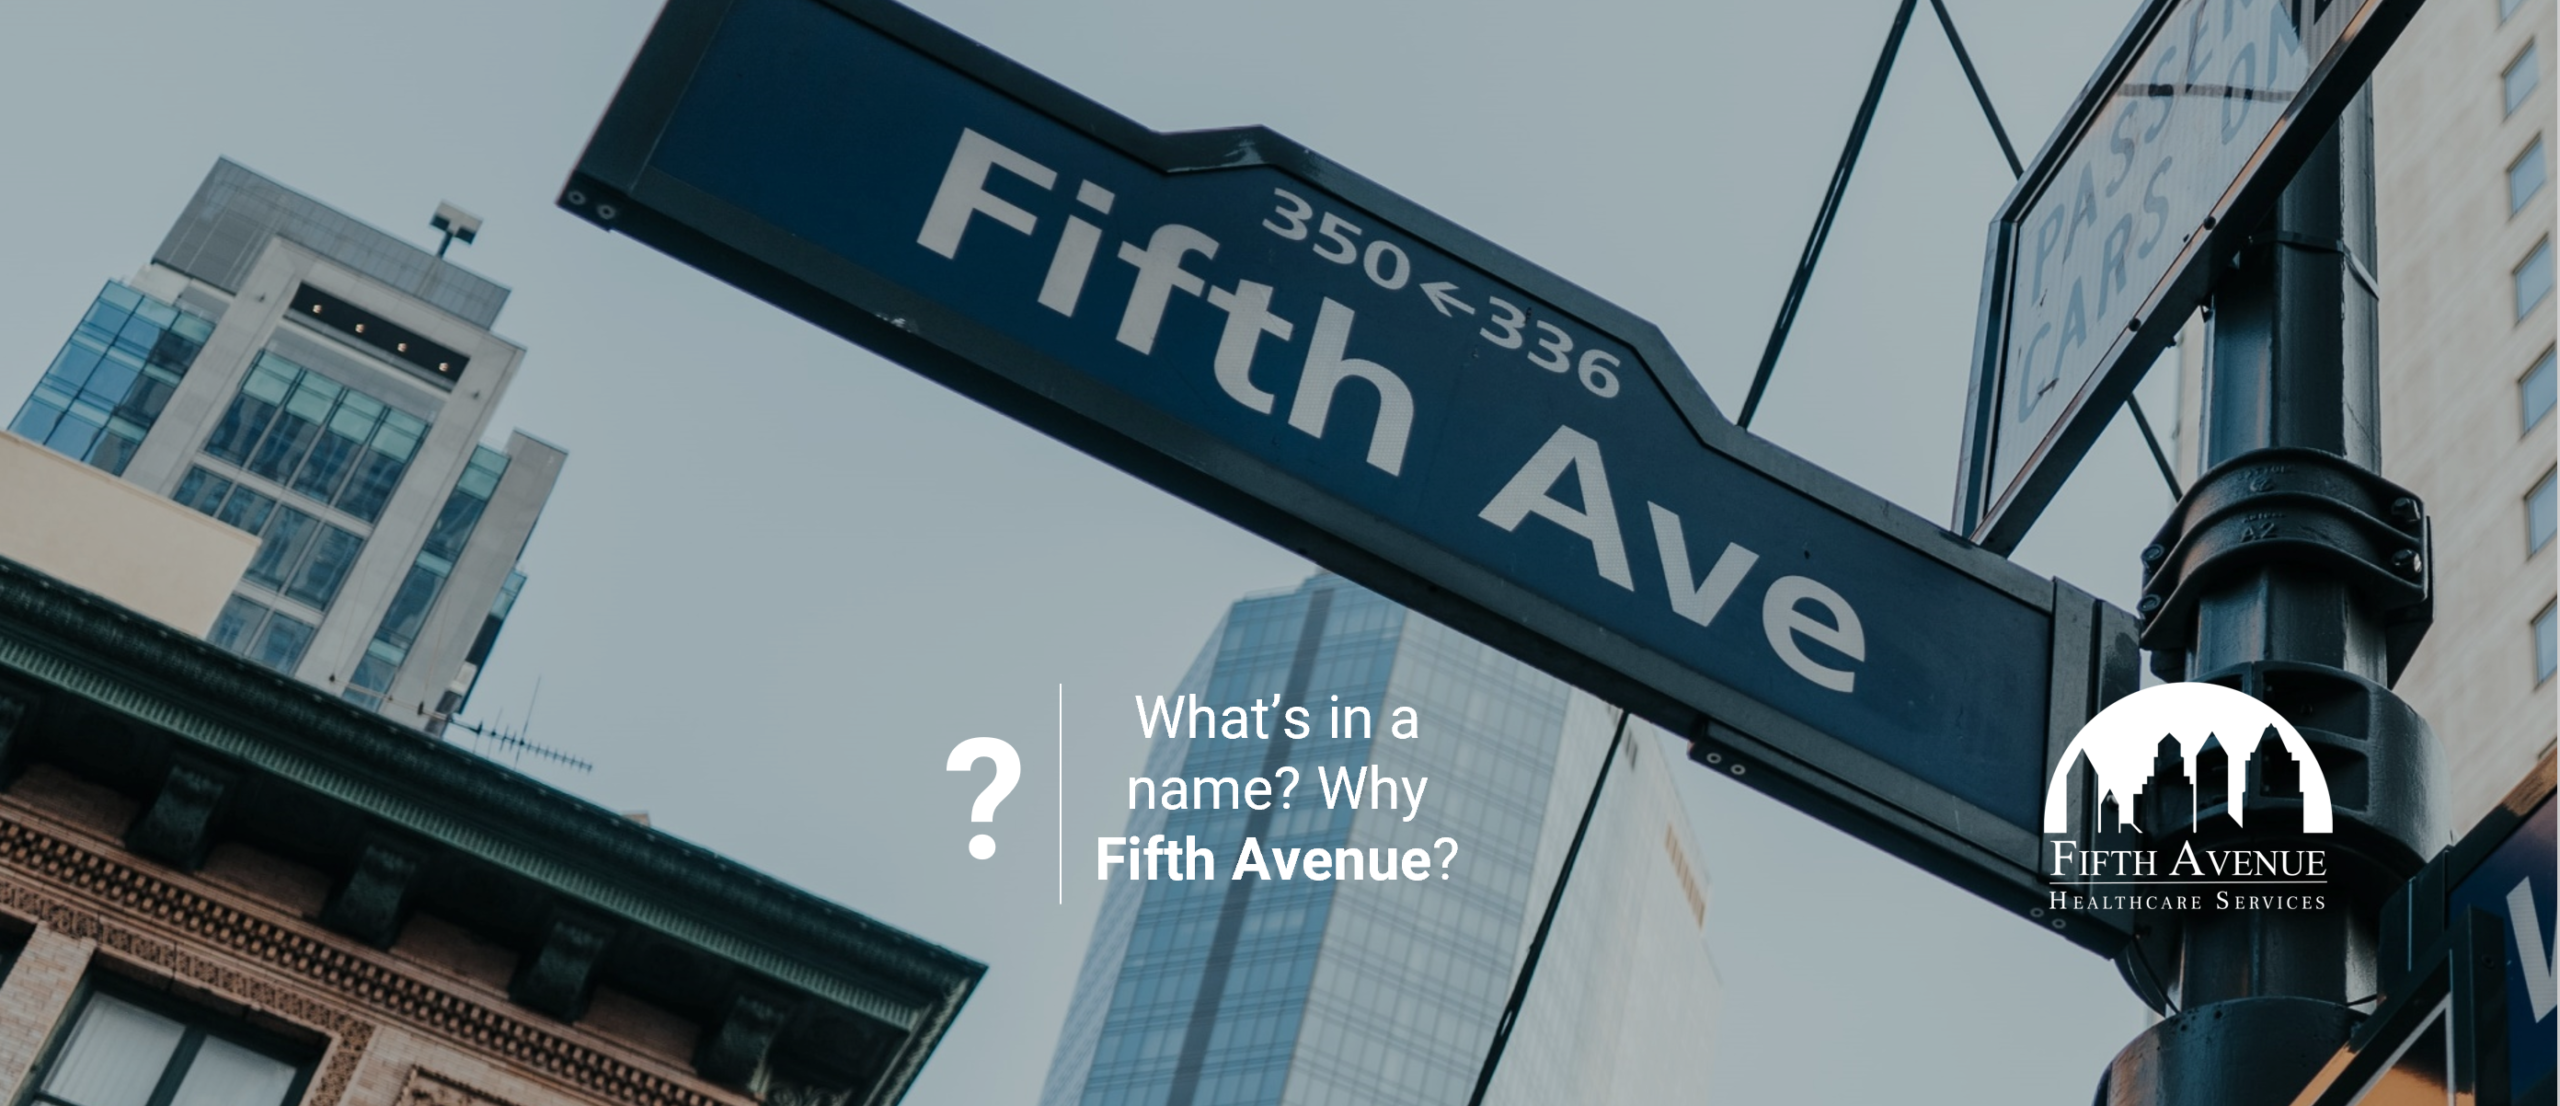 FifthAvenueHealthcareServices.com Fifth Avenue